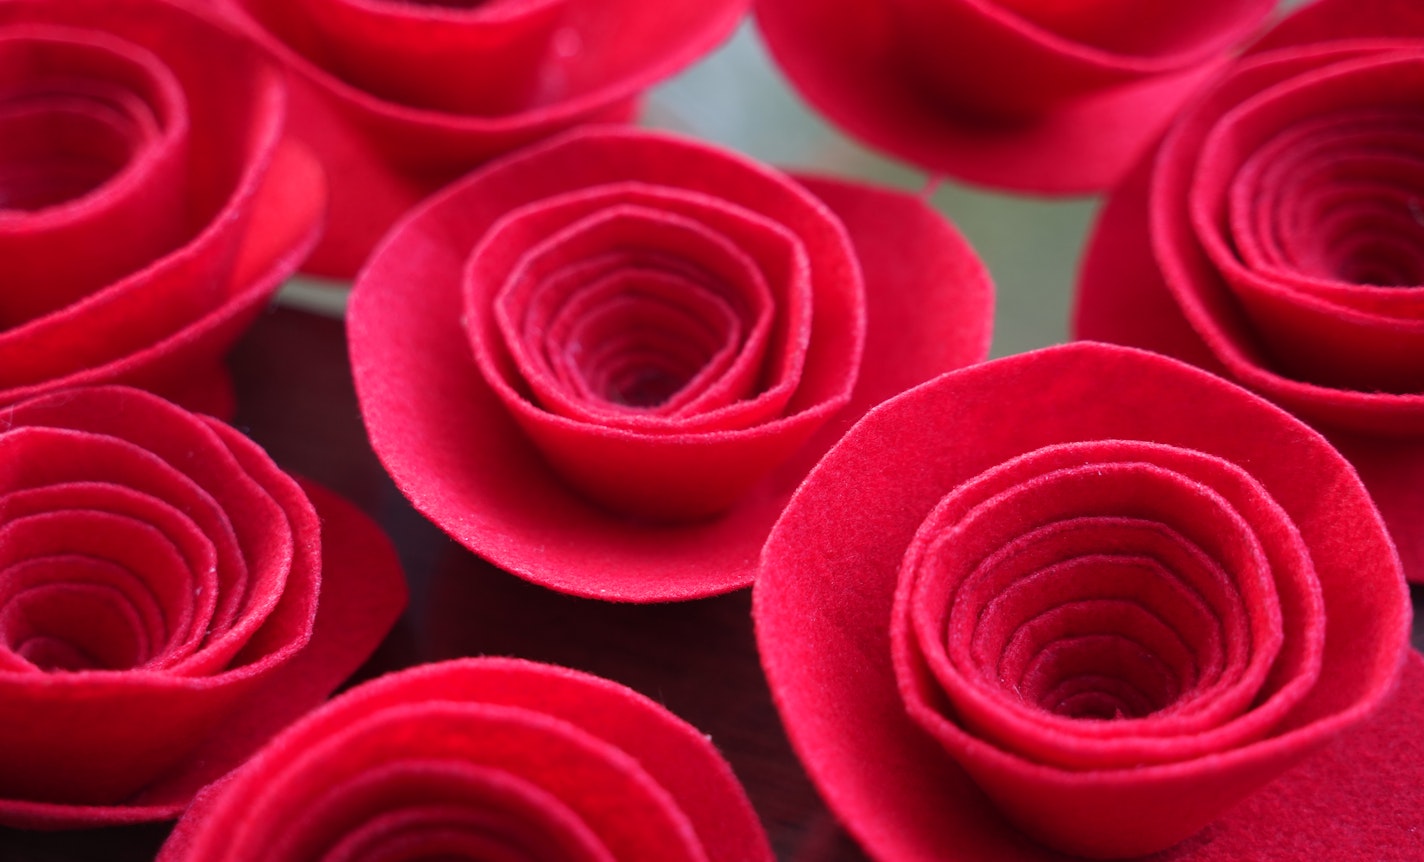 Rose River Memorial: Gather Online to Make Roses